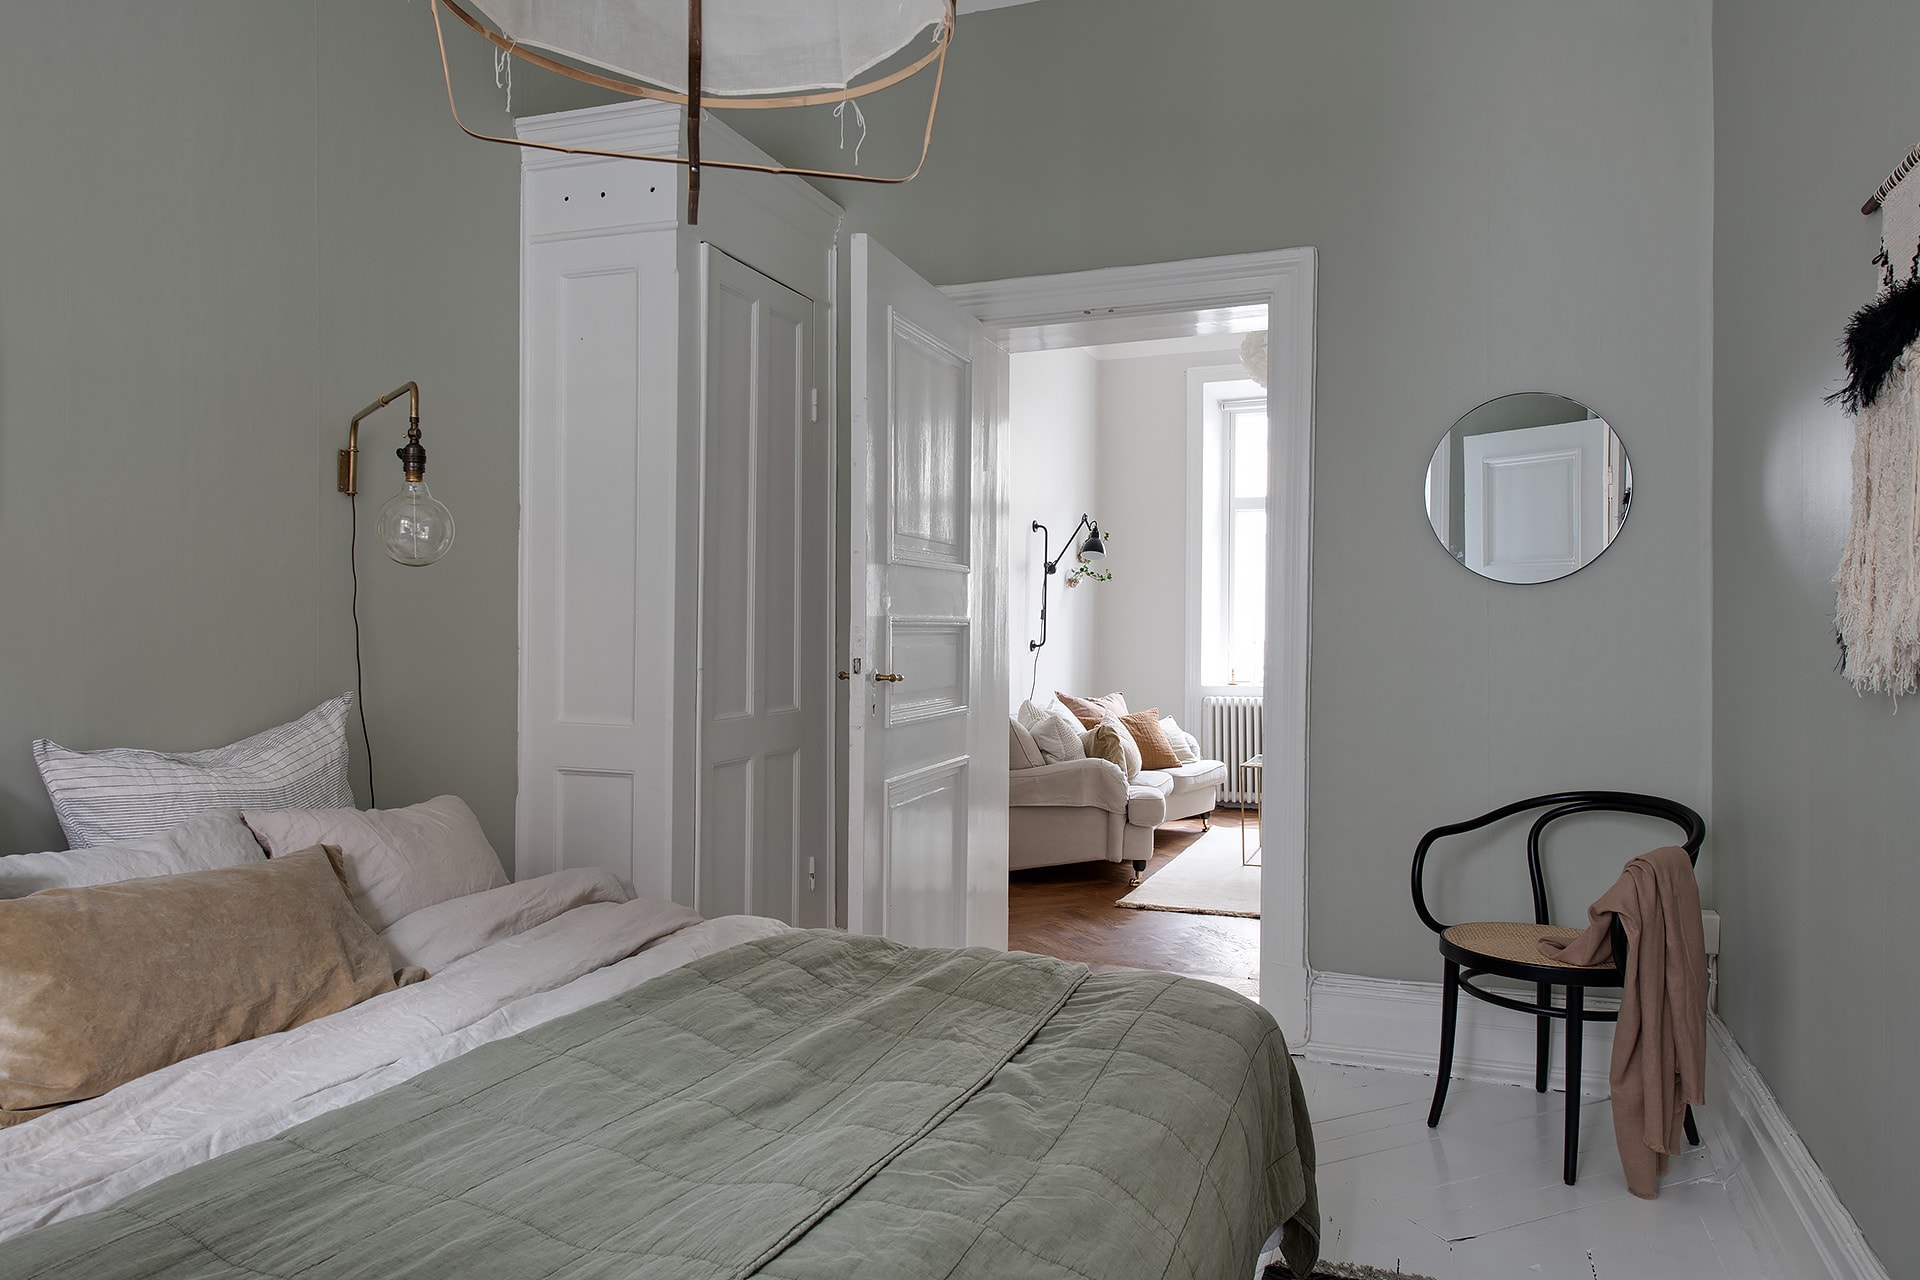 Bedroom In Pale Green Coco Lapine Designcoco Lapine Design